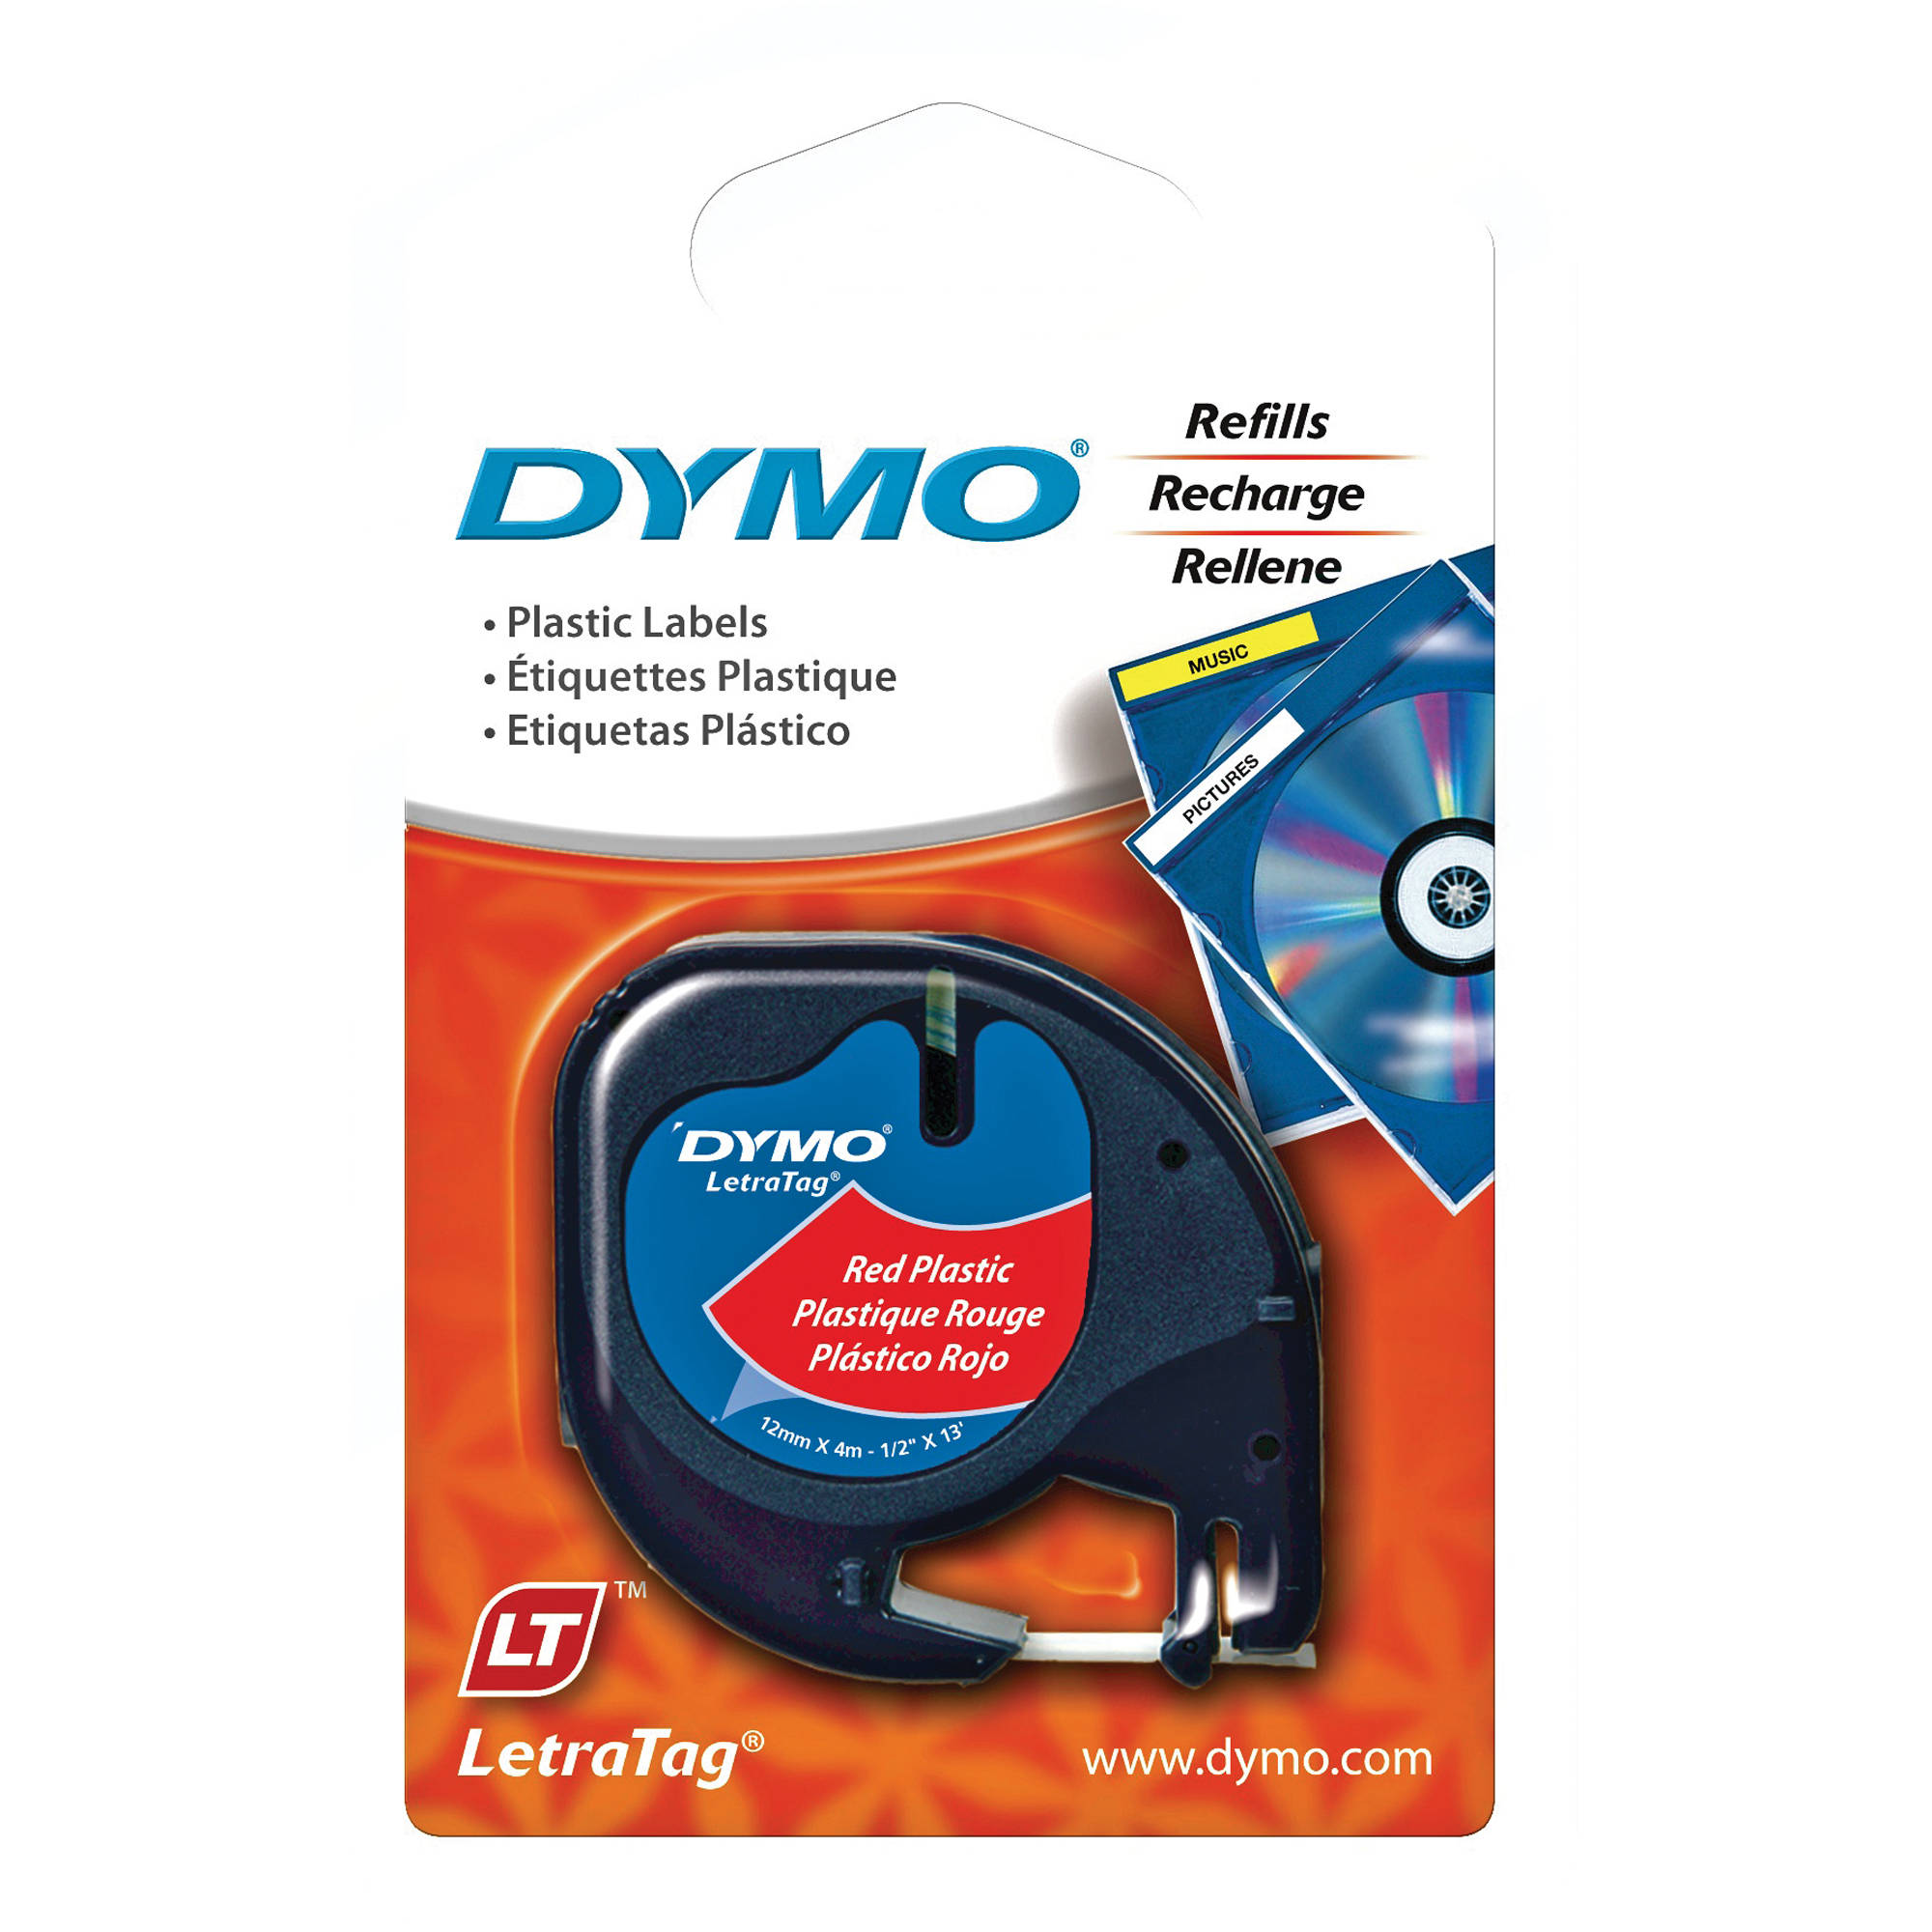 Dymo Plastic LetraTag Tape (Black on Red, 1/2" x 13')